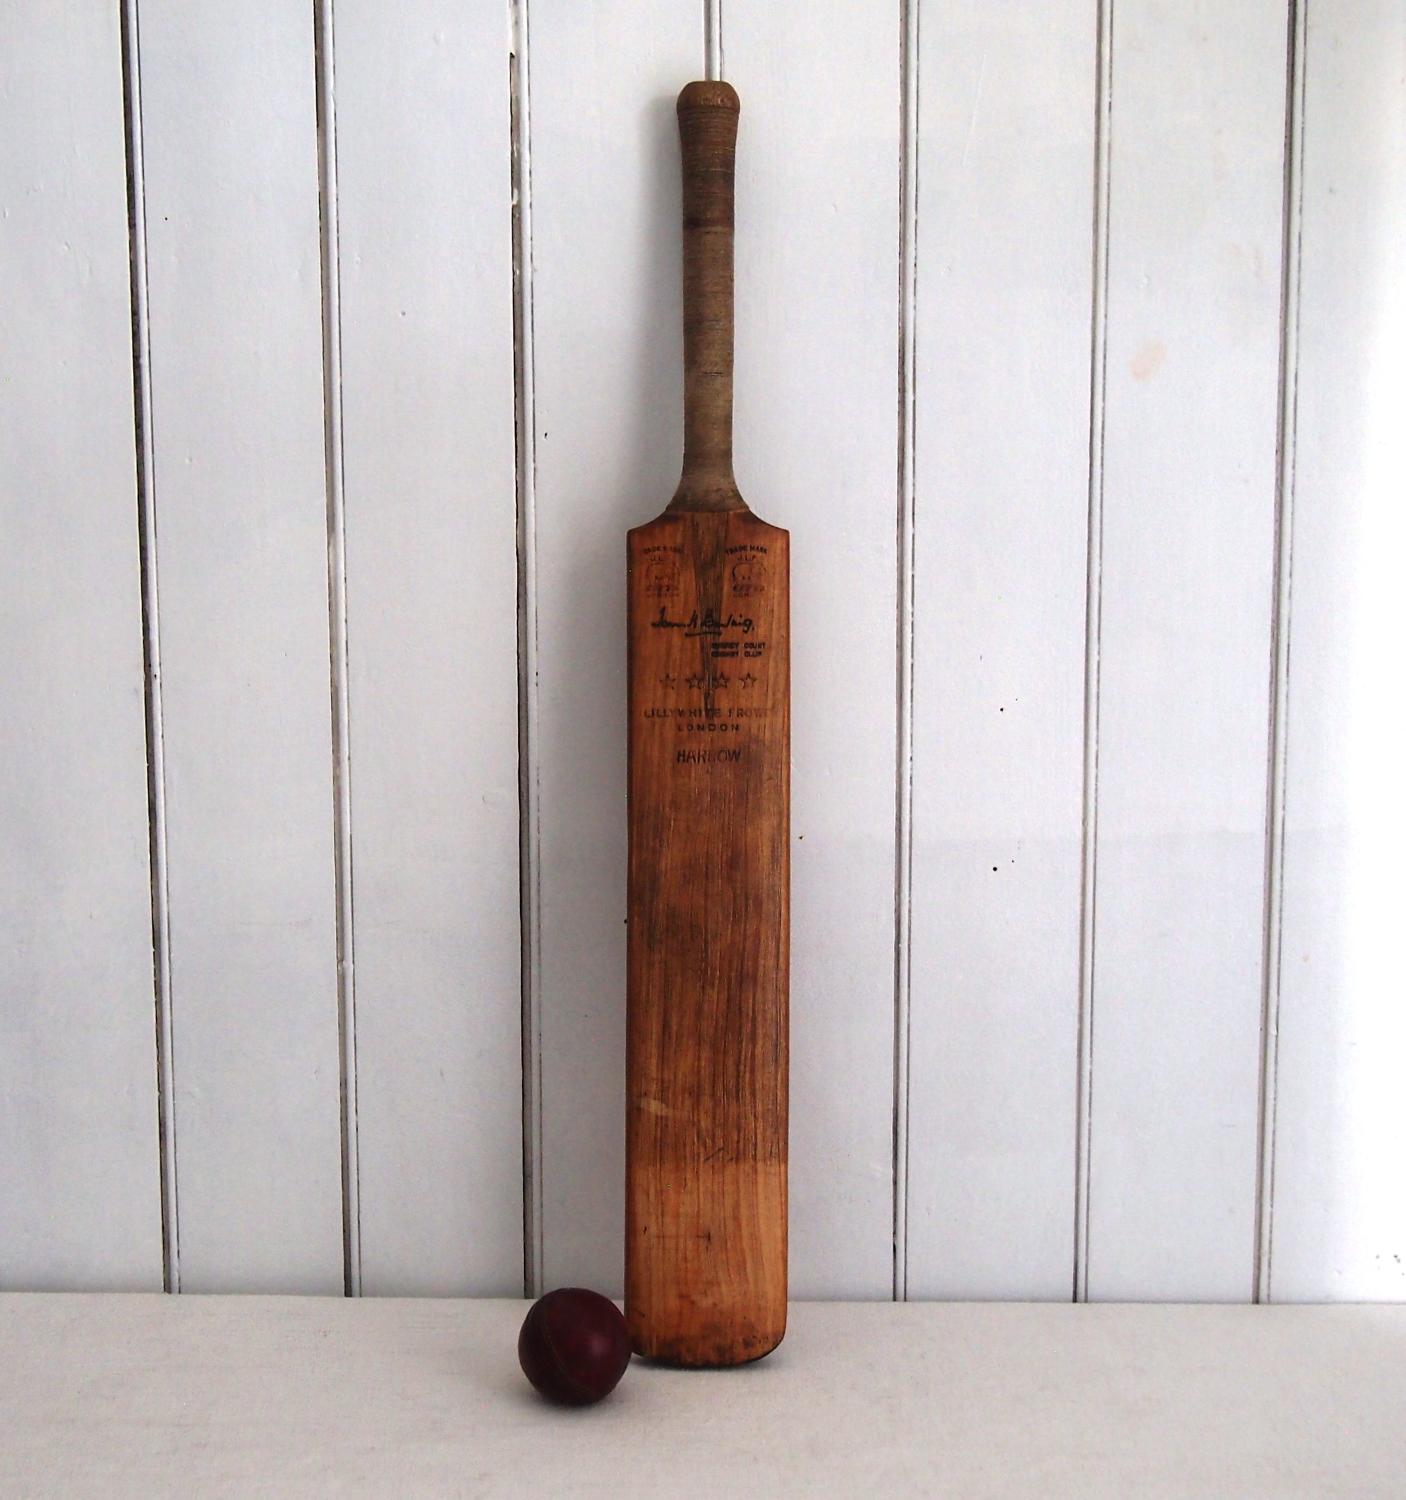 Vintage Cricket Bat Lillywhites Harrow bat C1960s